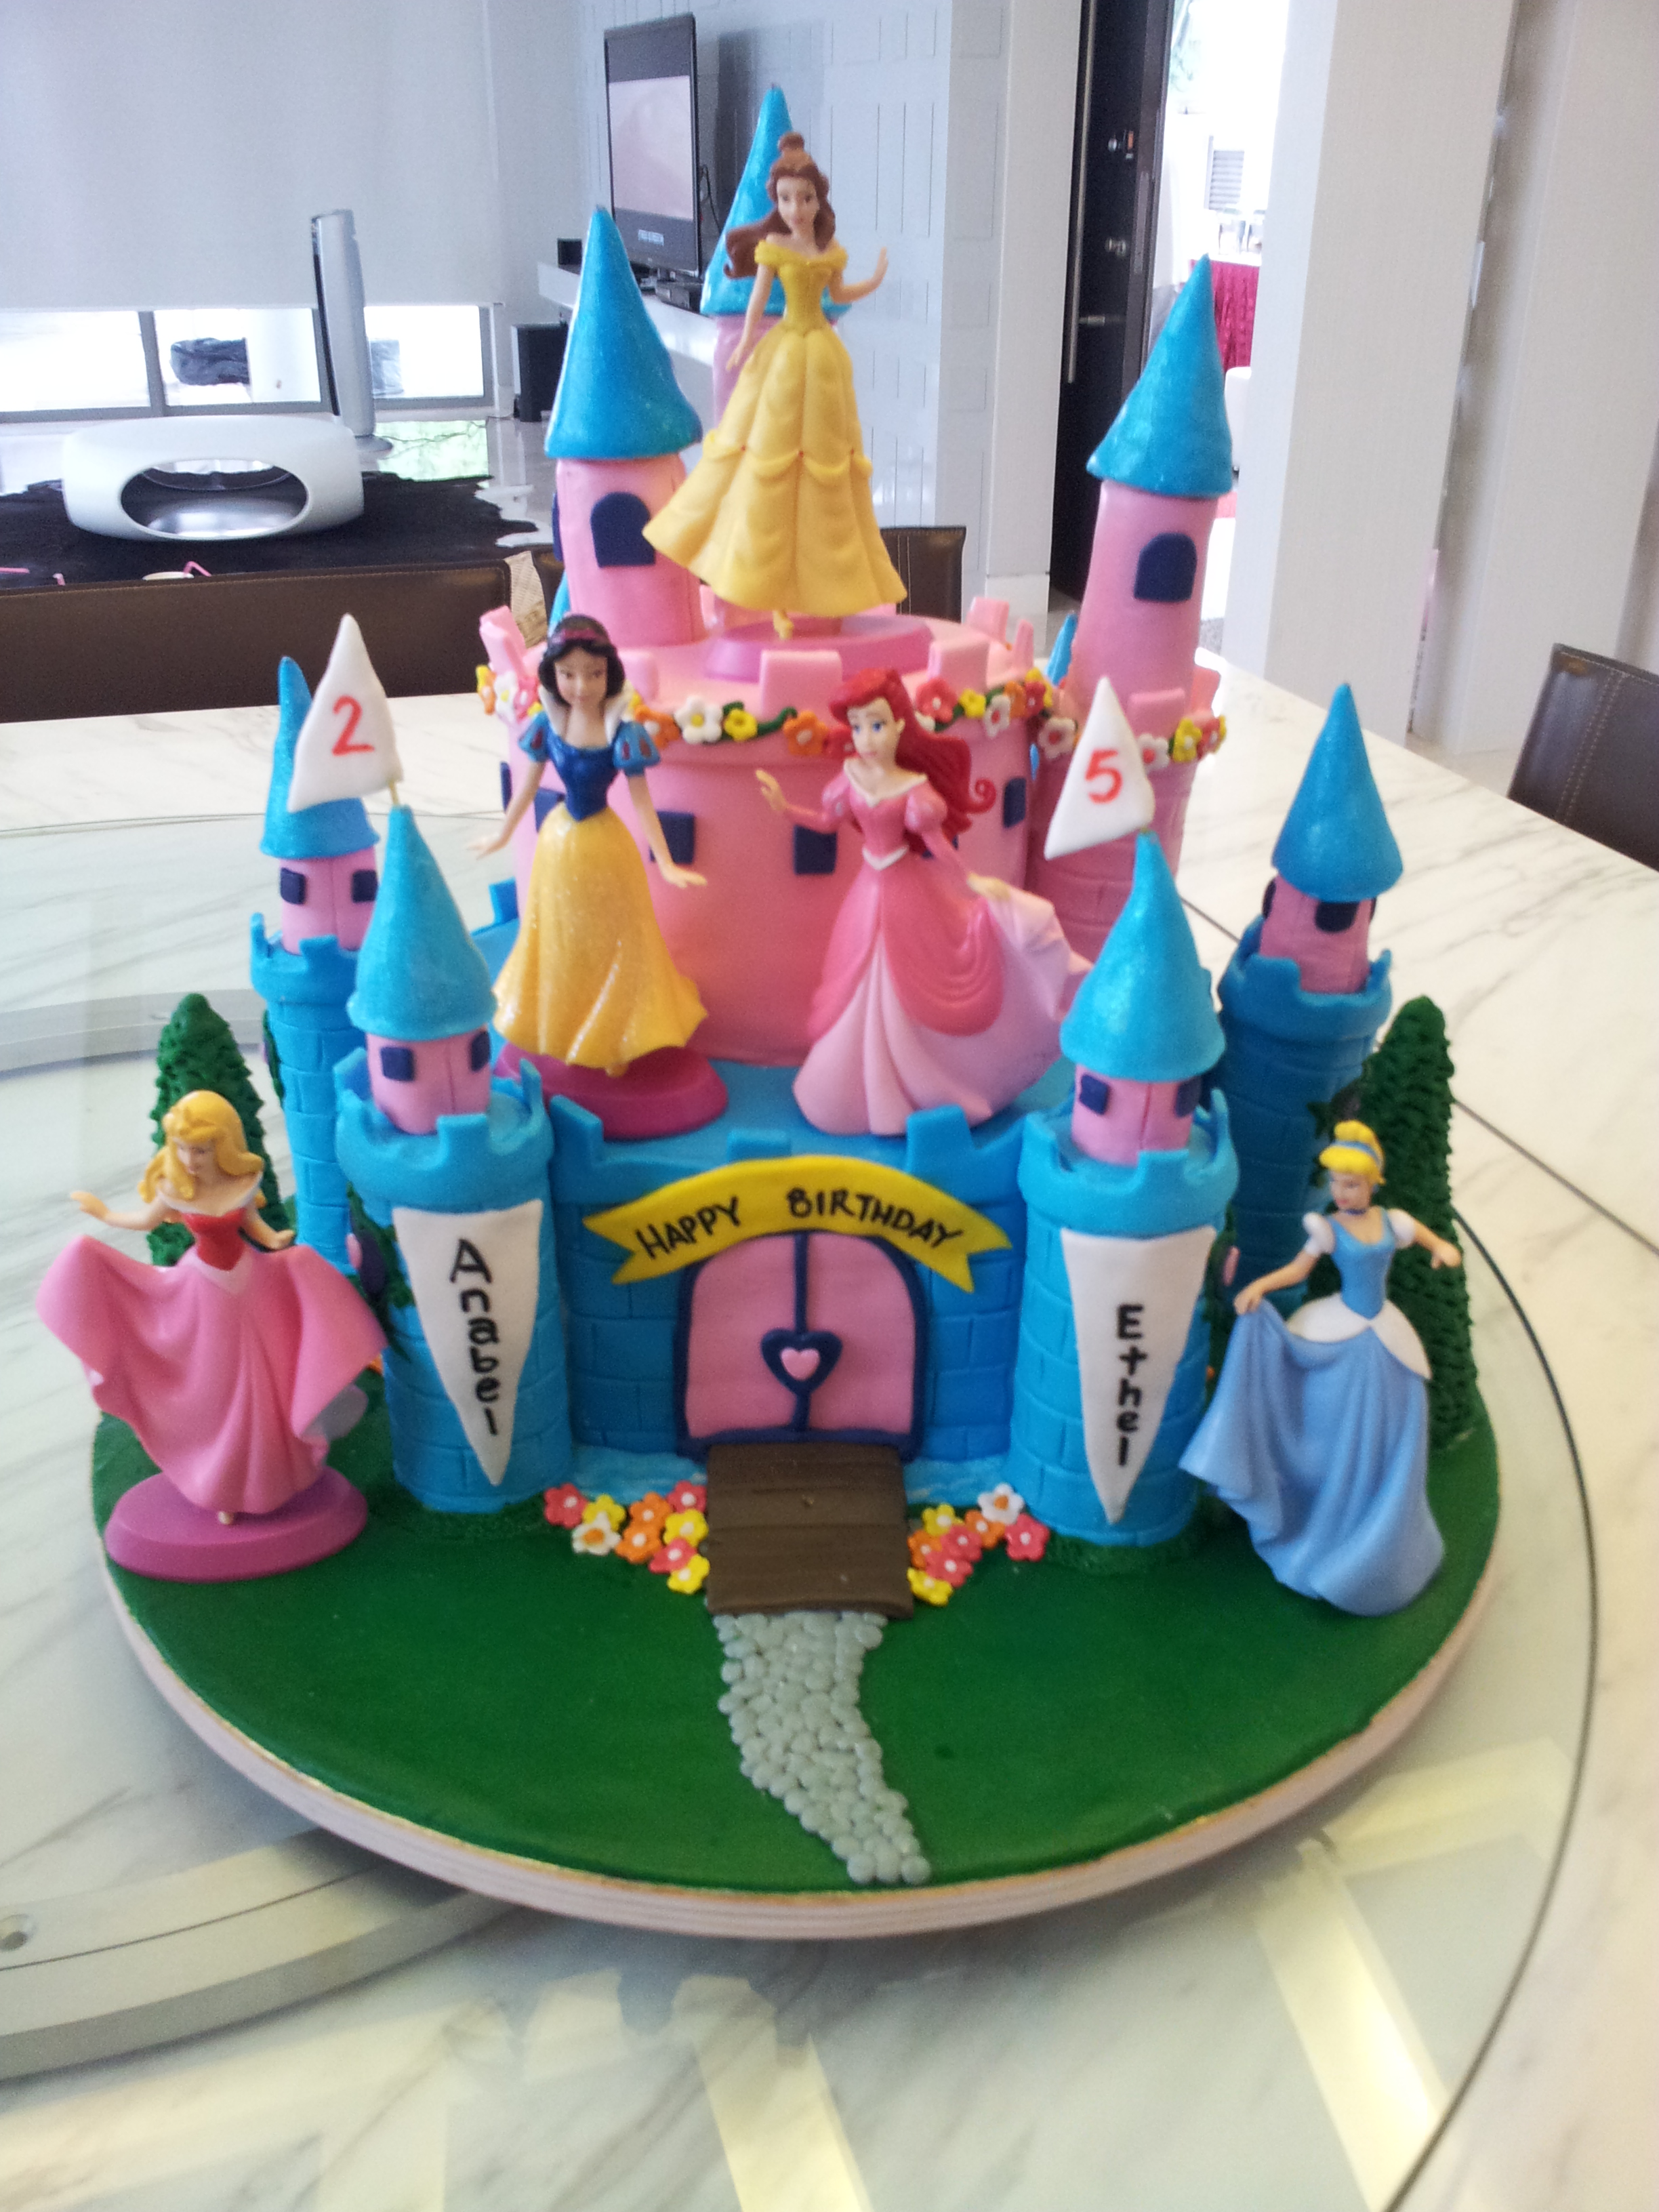 5 Year Old Birthday Cake For Girl - A Birthday Cake